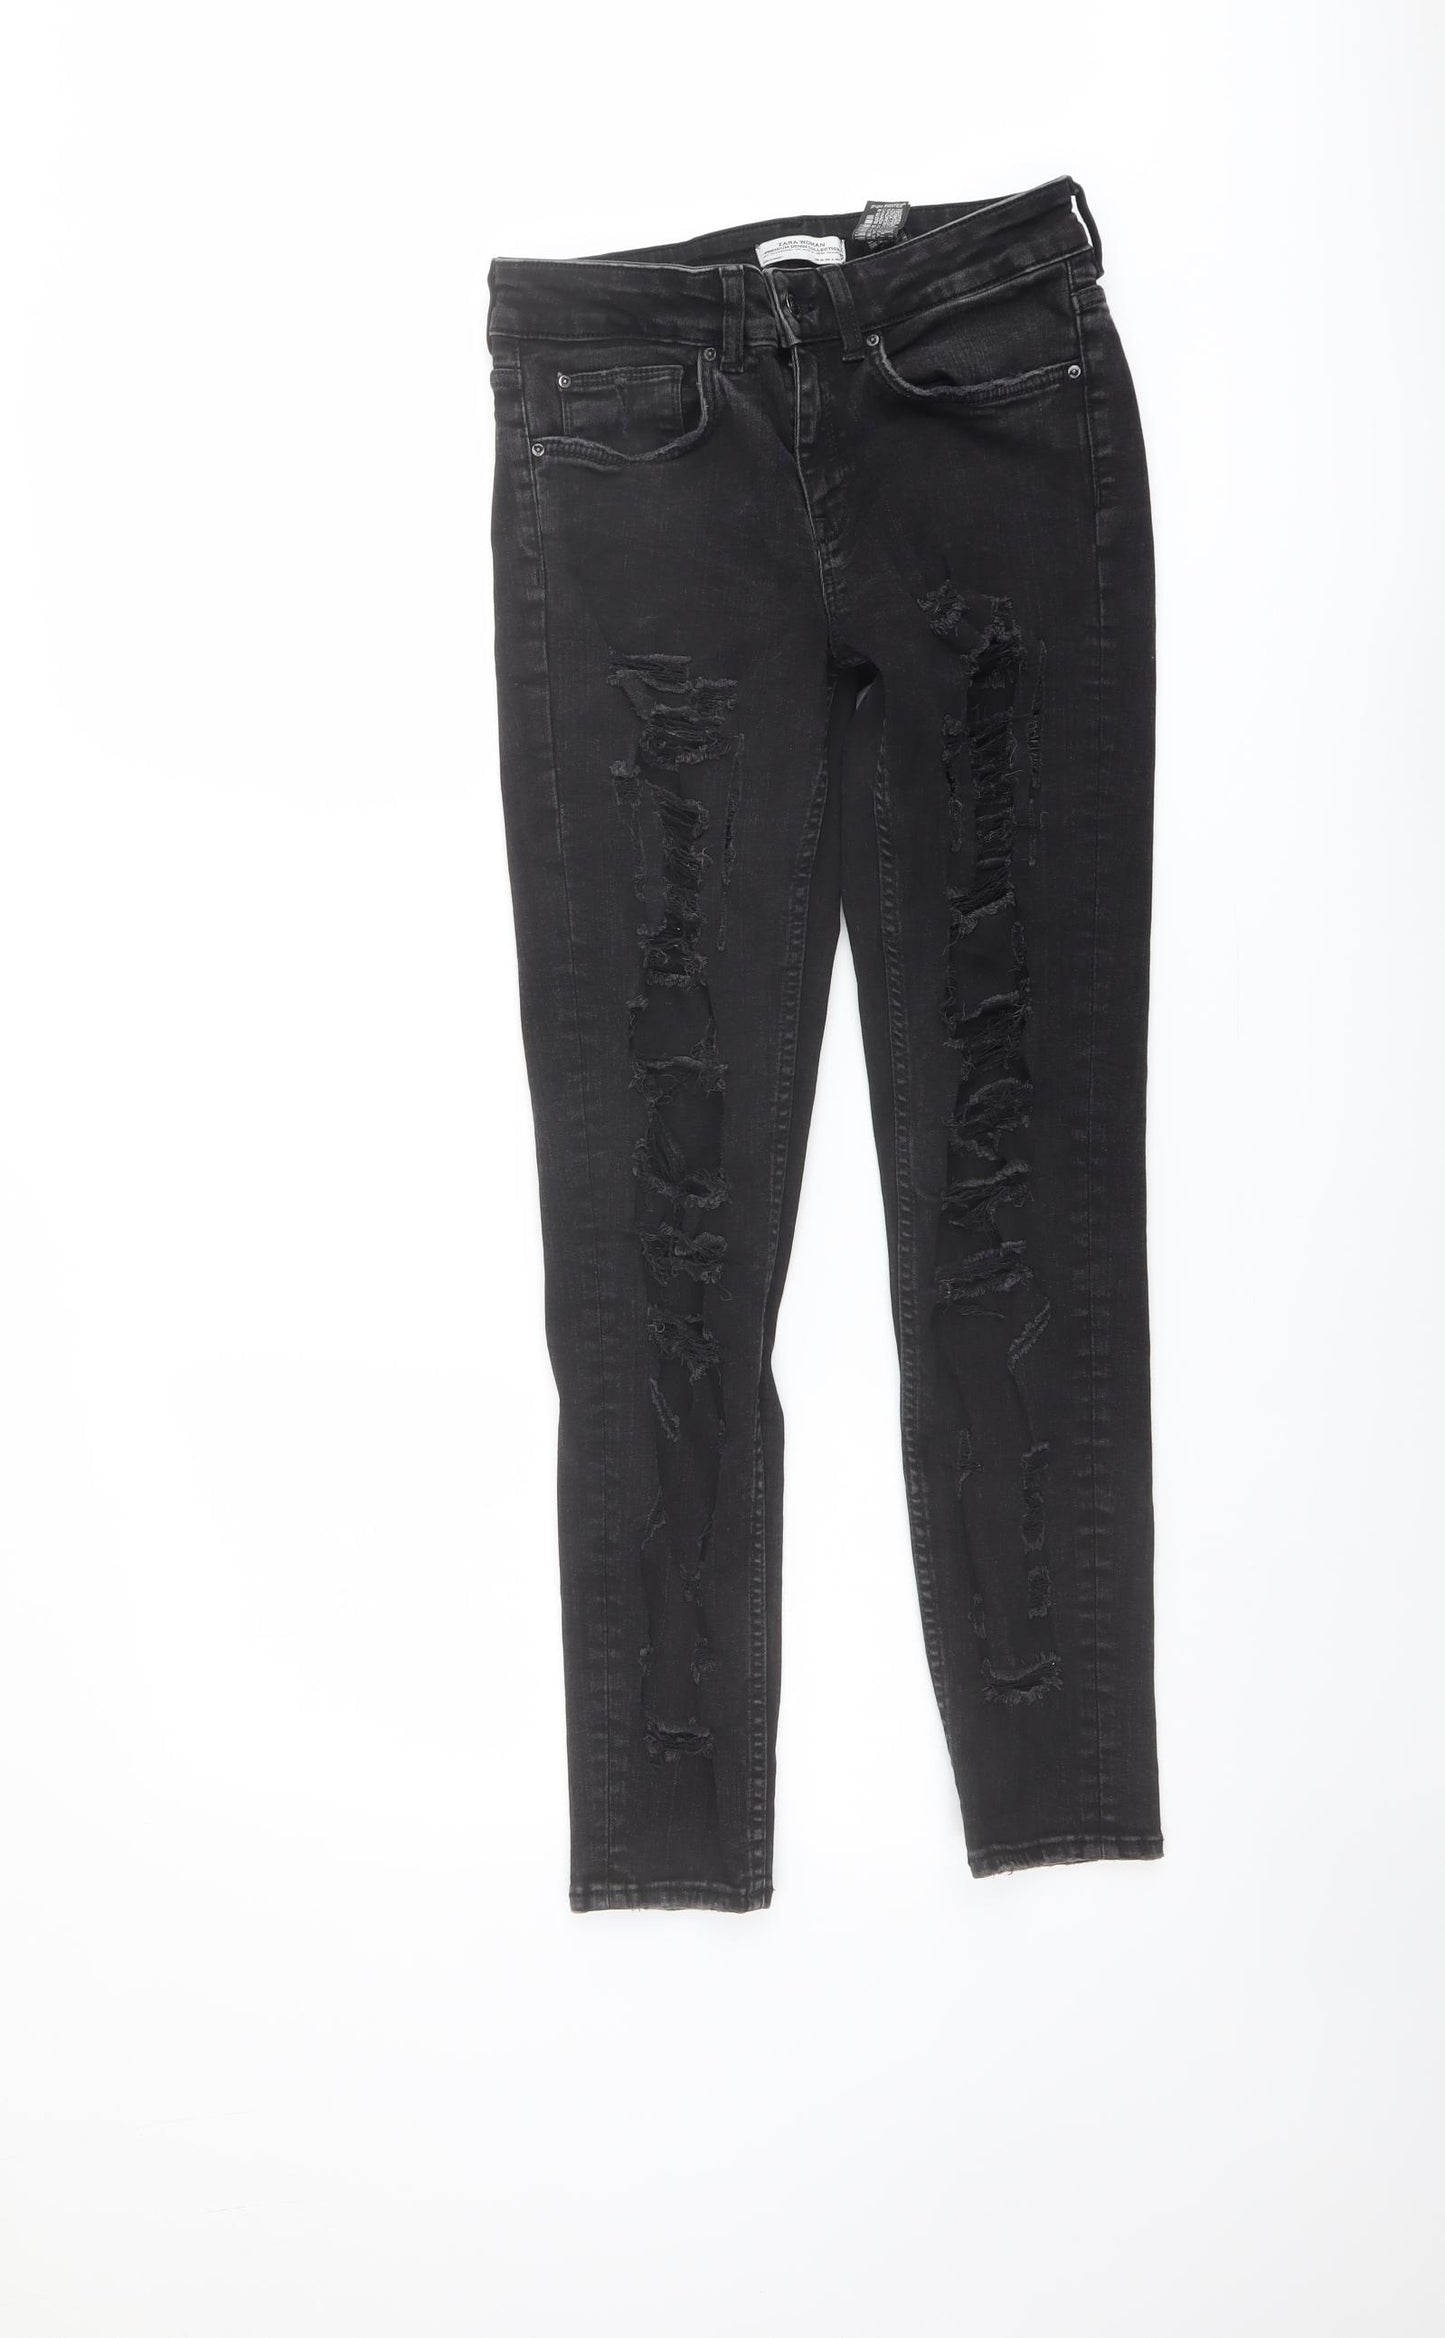 Zara Womens Grey Cotton Skinny Jeans Size 8 L28 in Regular Button